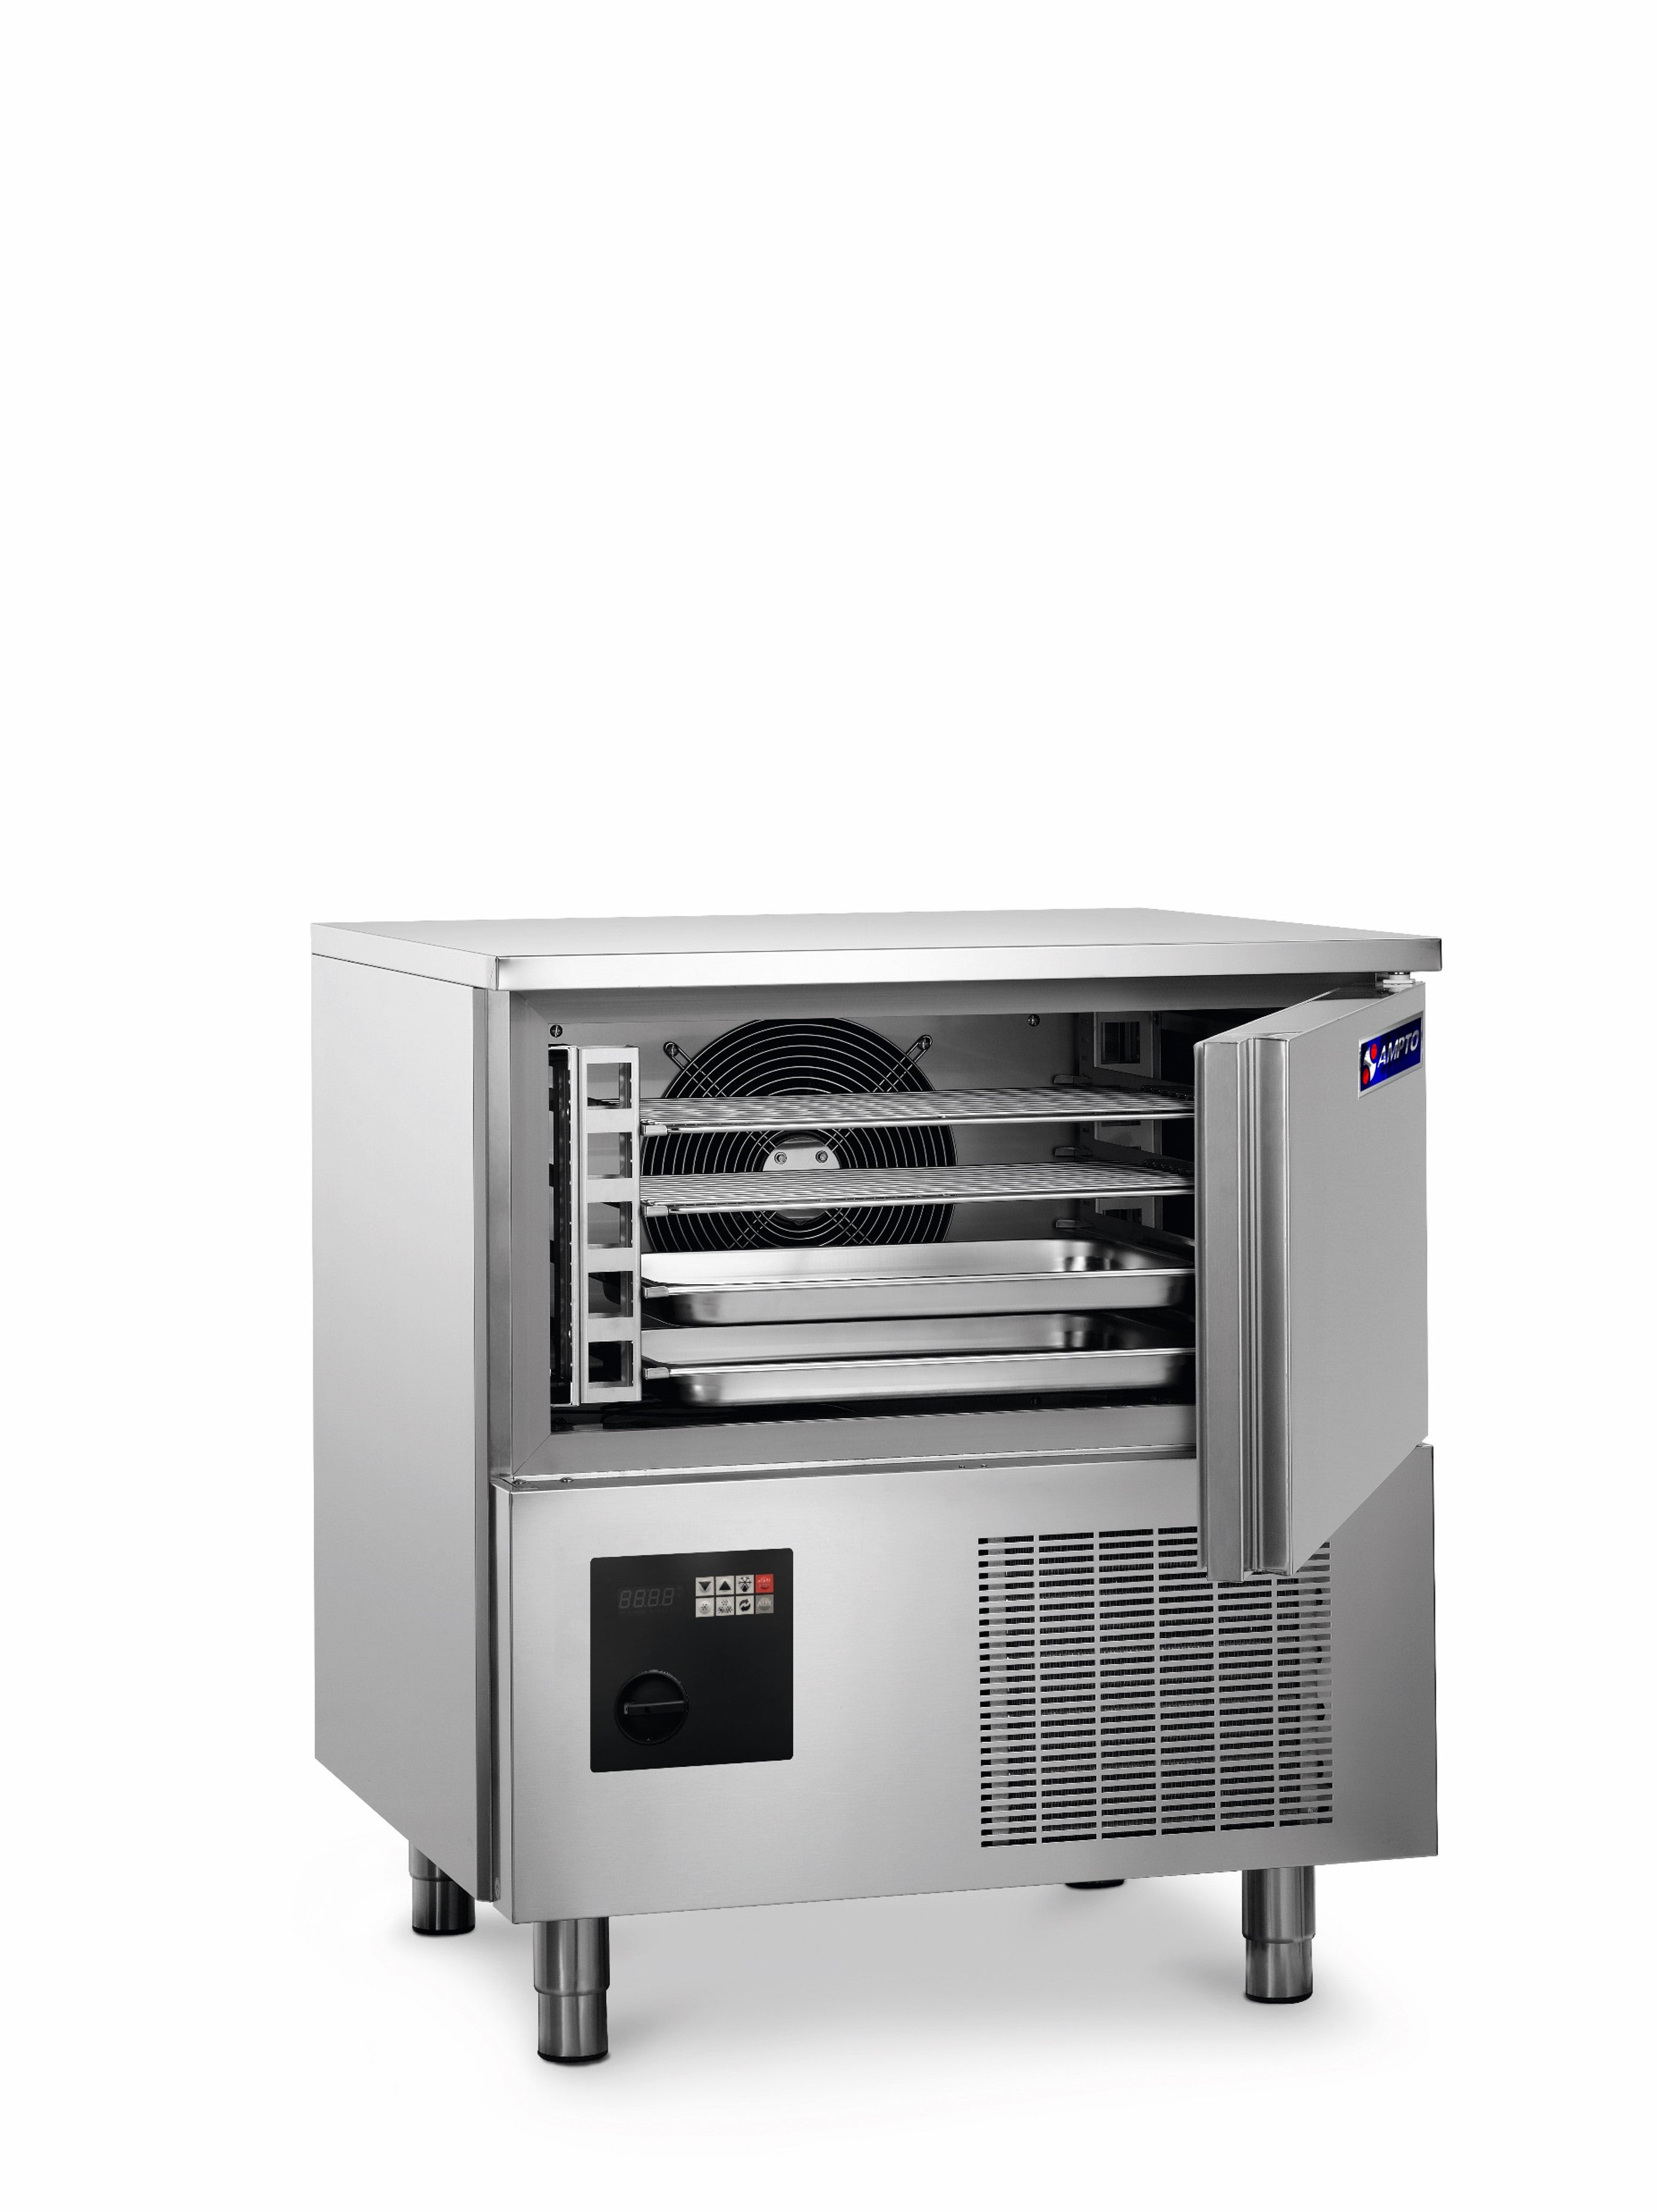 ABT-5US Blast freezer 5 trays capacity